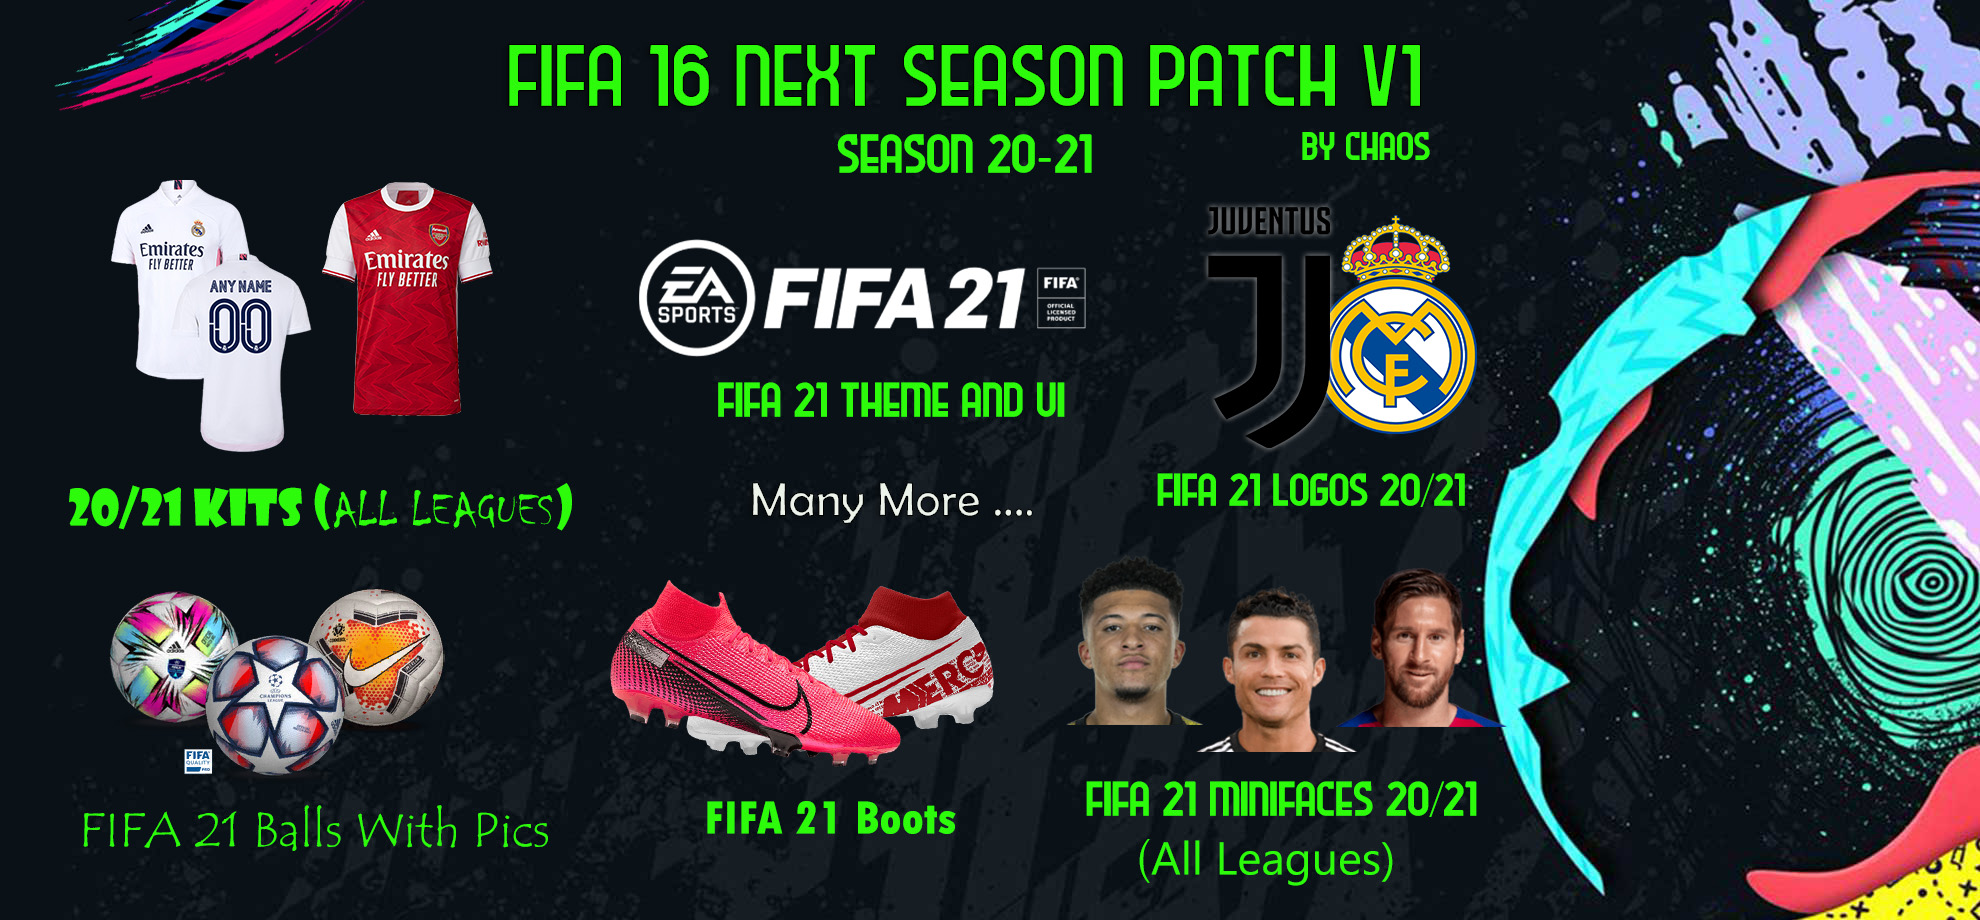 FIFA 16 Next Season Patch 20/21 Soccer Gaming